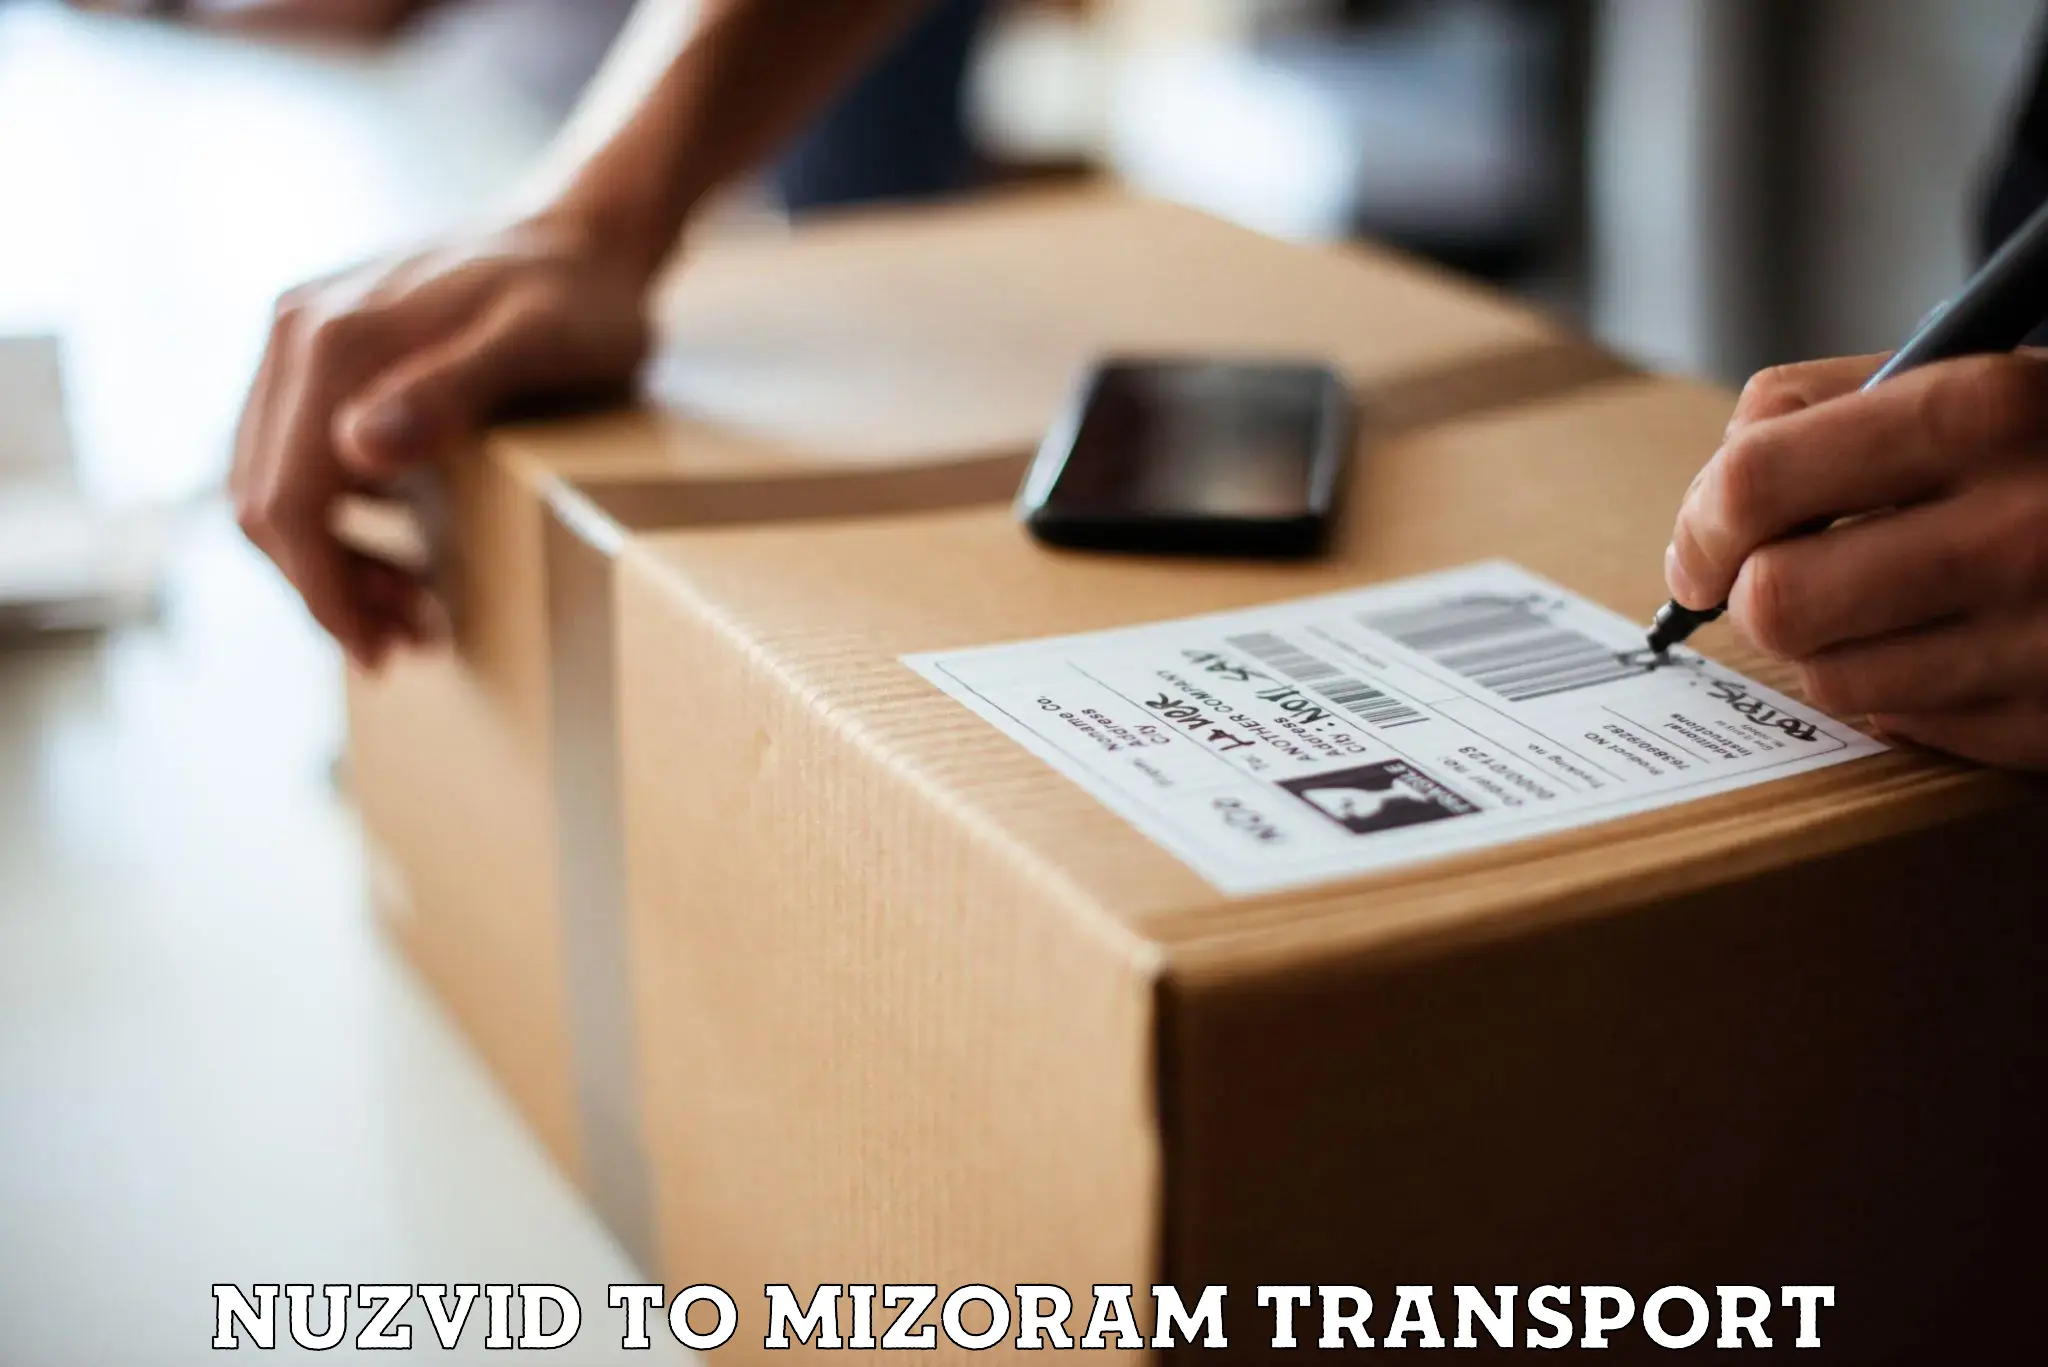 Transport in sharing Nuzvid to Mizoram